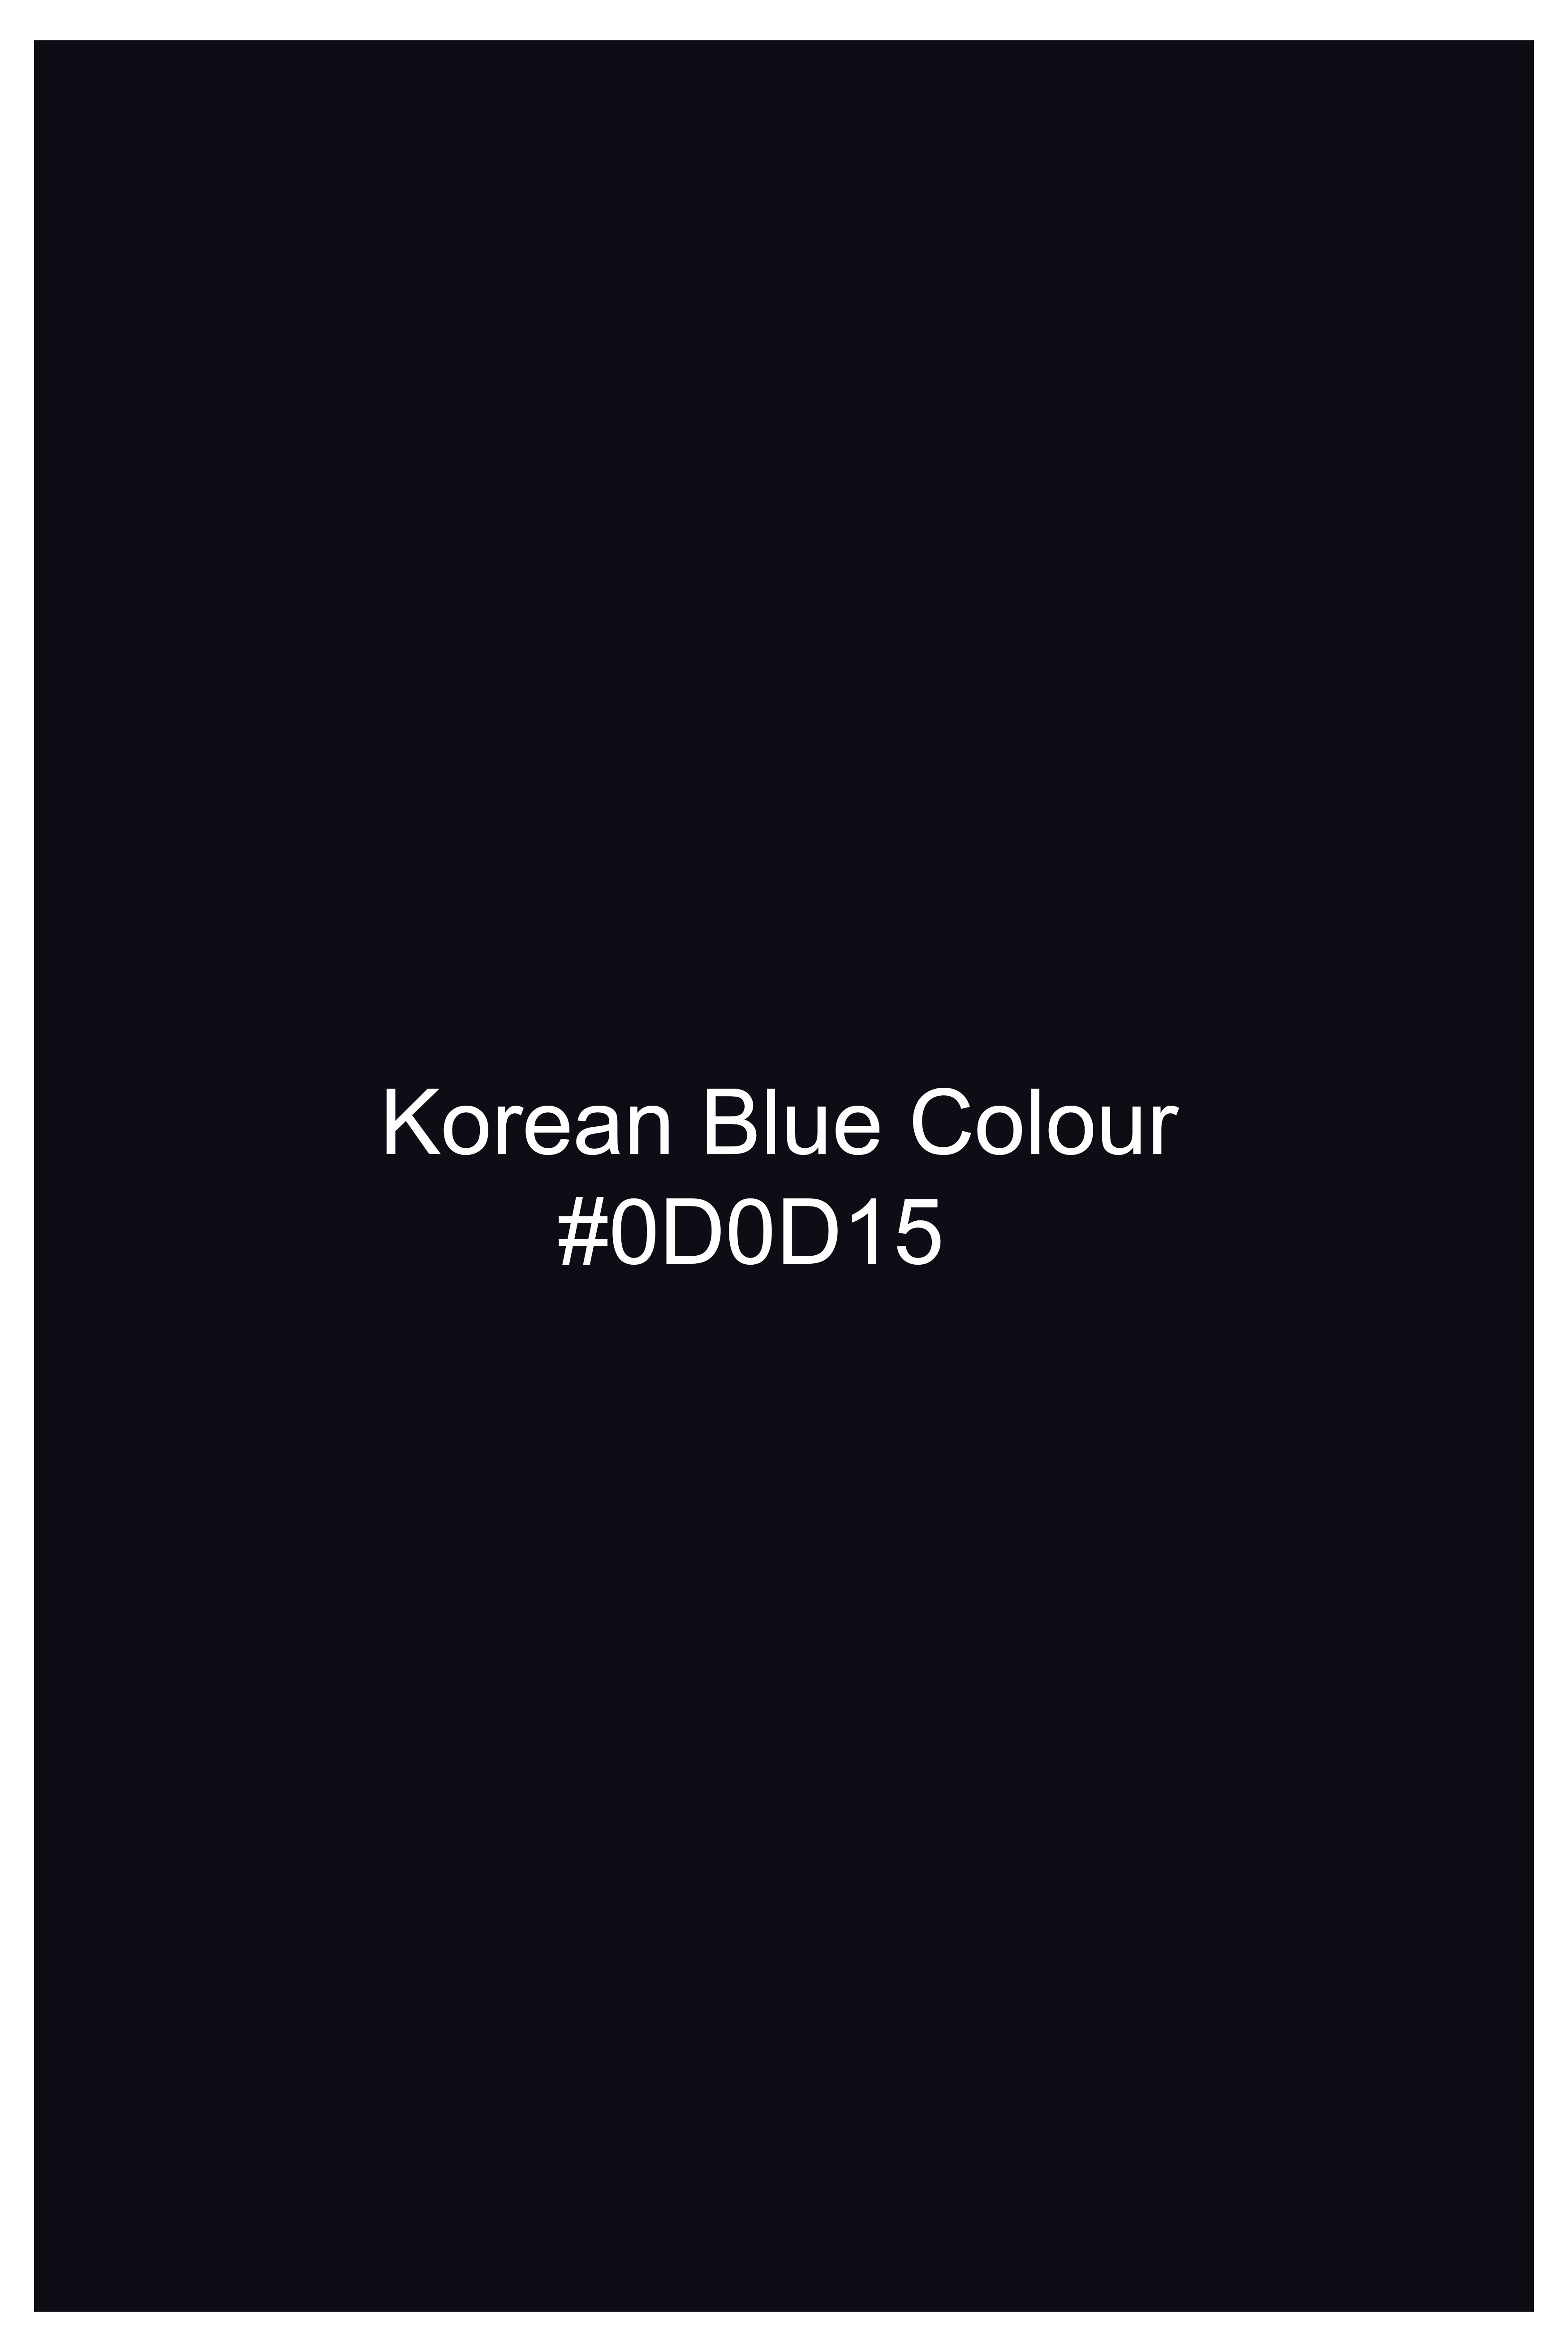 Korean Blue (The Best Blue We Have) Wool Rich Stretchable Traveler Blazer BL3267-SB-36, BL3267-SB-38, BL3267-SB-40, BL3267-SB-42, BL3267-SB-44, BL3267-SB-46, BL3267-SB-48, BL3267-SB-50, BL3267-SB-52, BL3267-SB-54, BL3267-SB-56, BL3267-SB-58, BL3267-SB-60